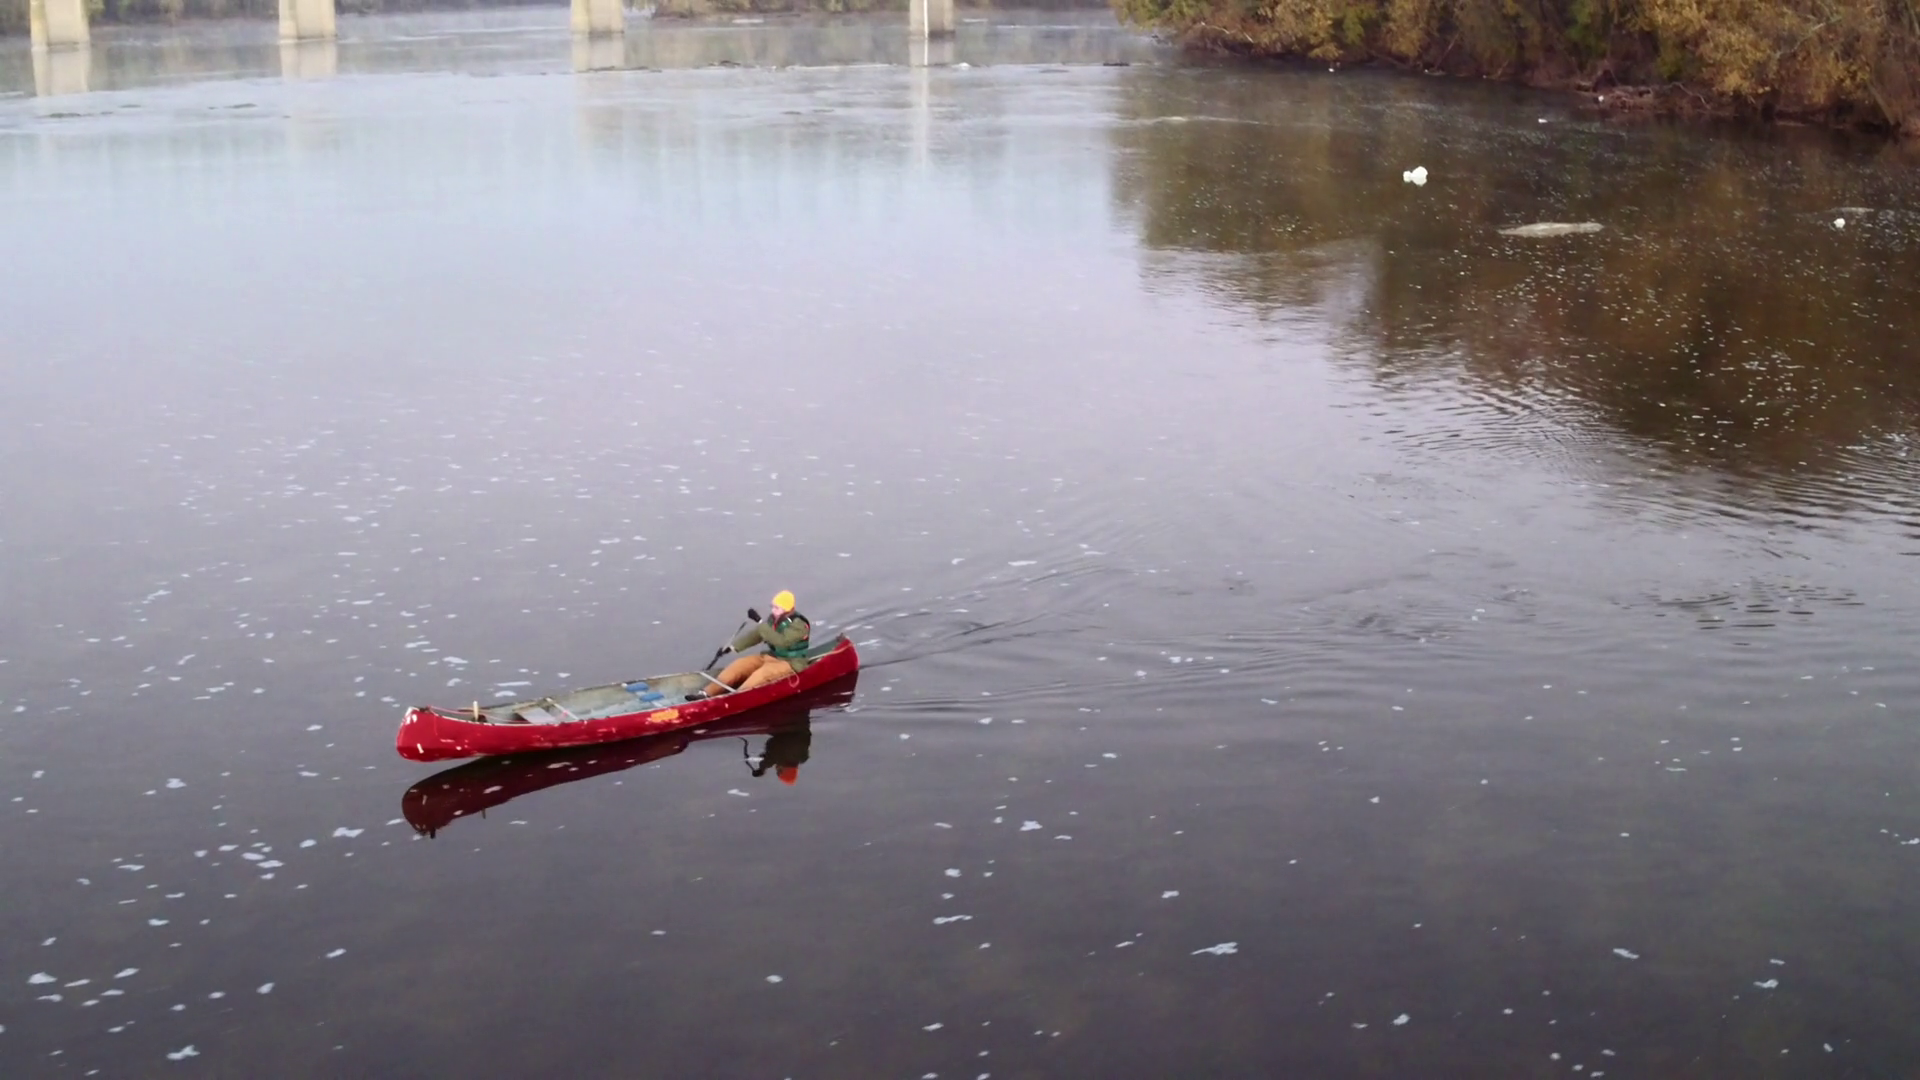 Canoer On The River Stock Video Footage - VideoBlocks